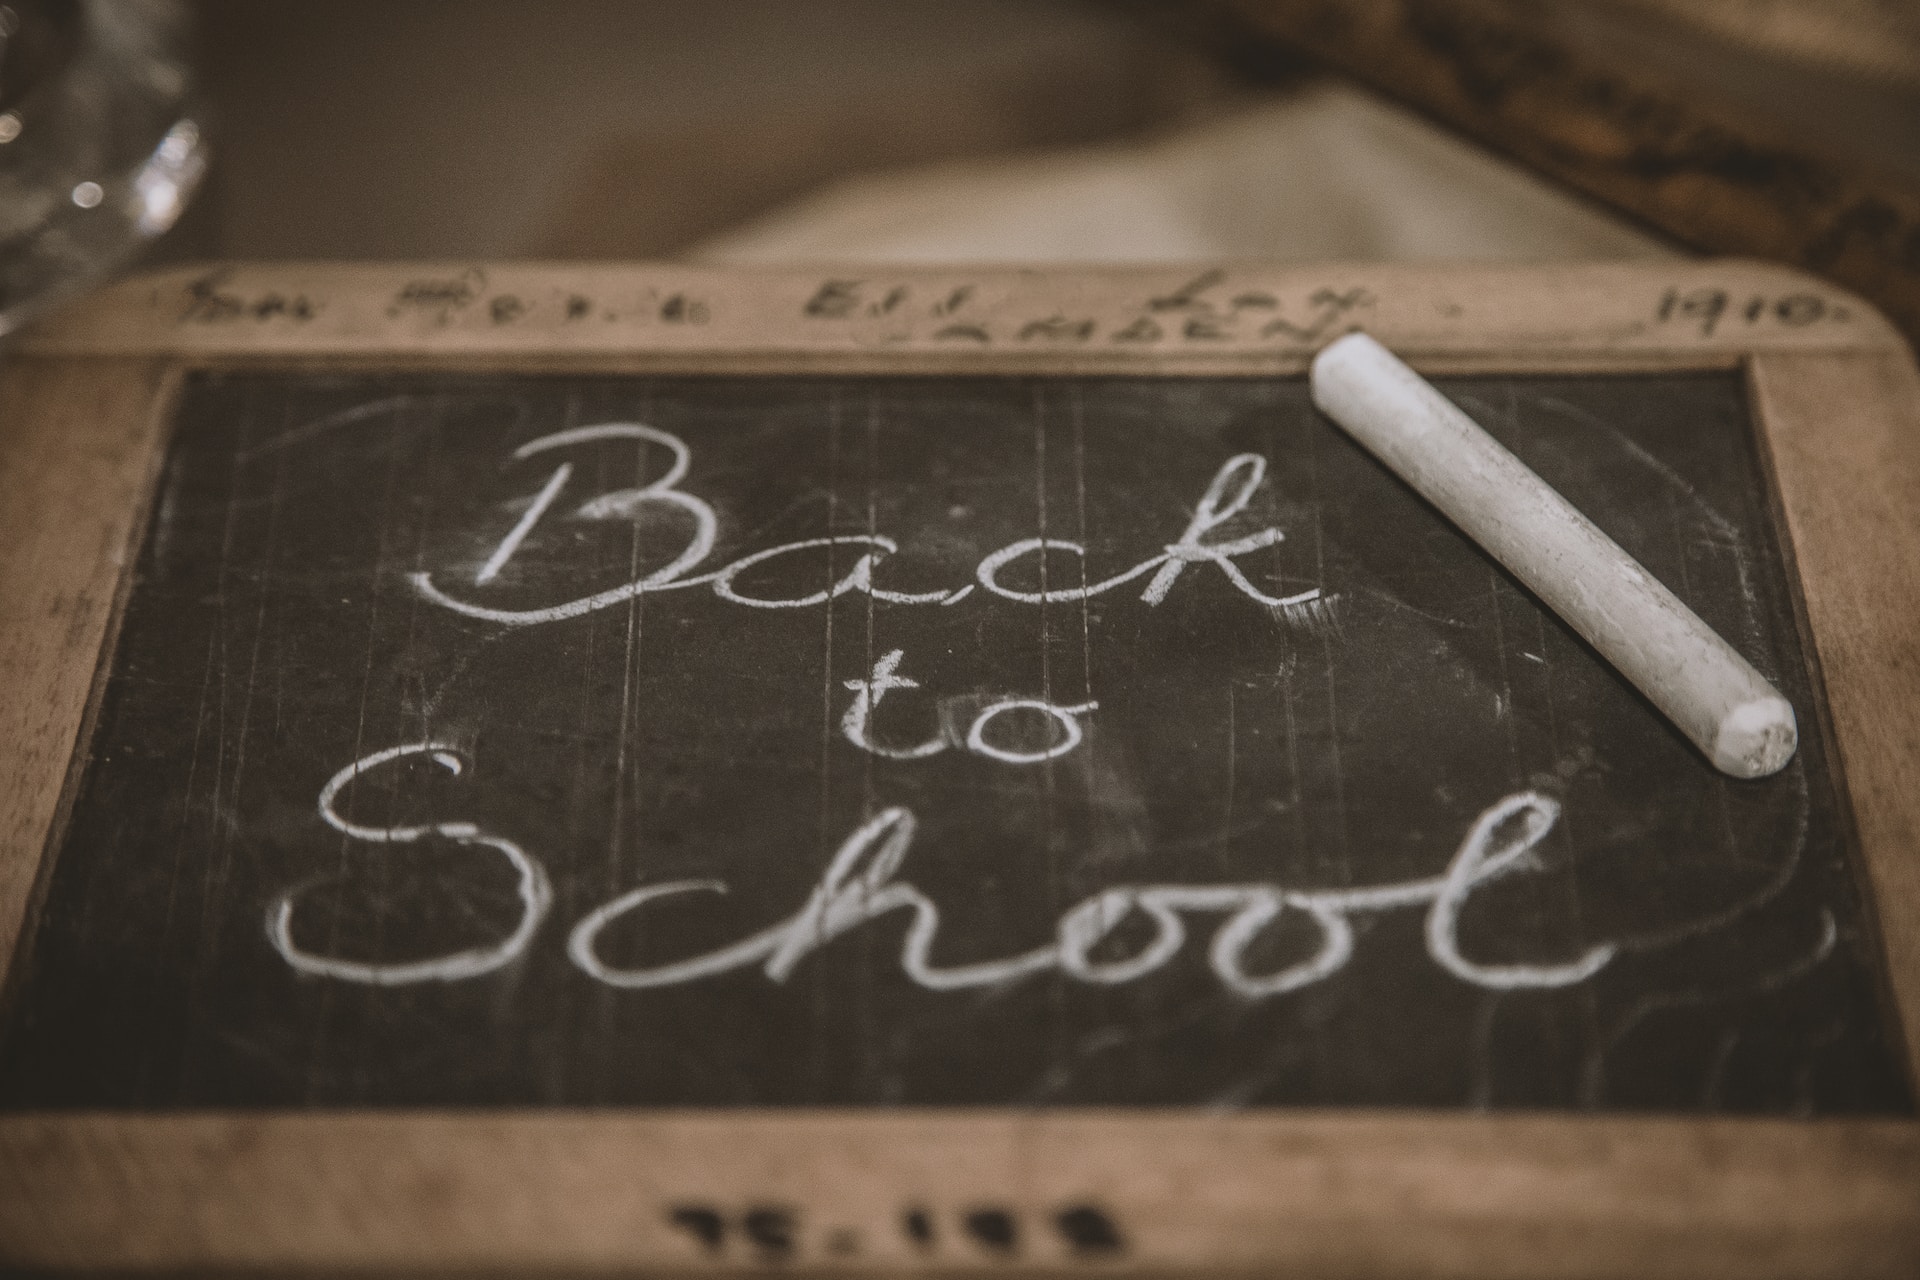 Back to September: Tips for Going Back to School